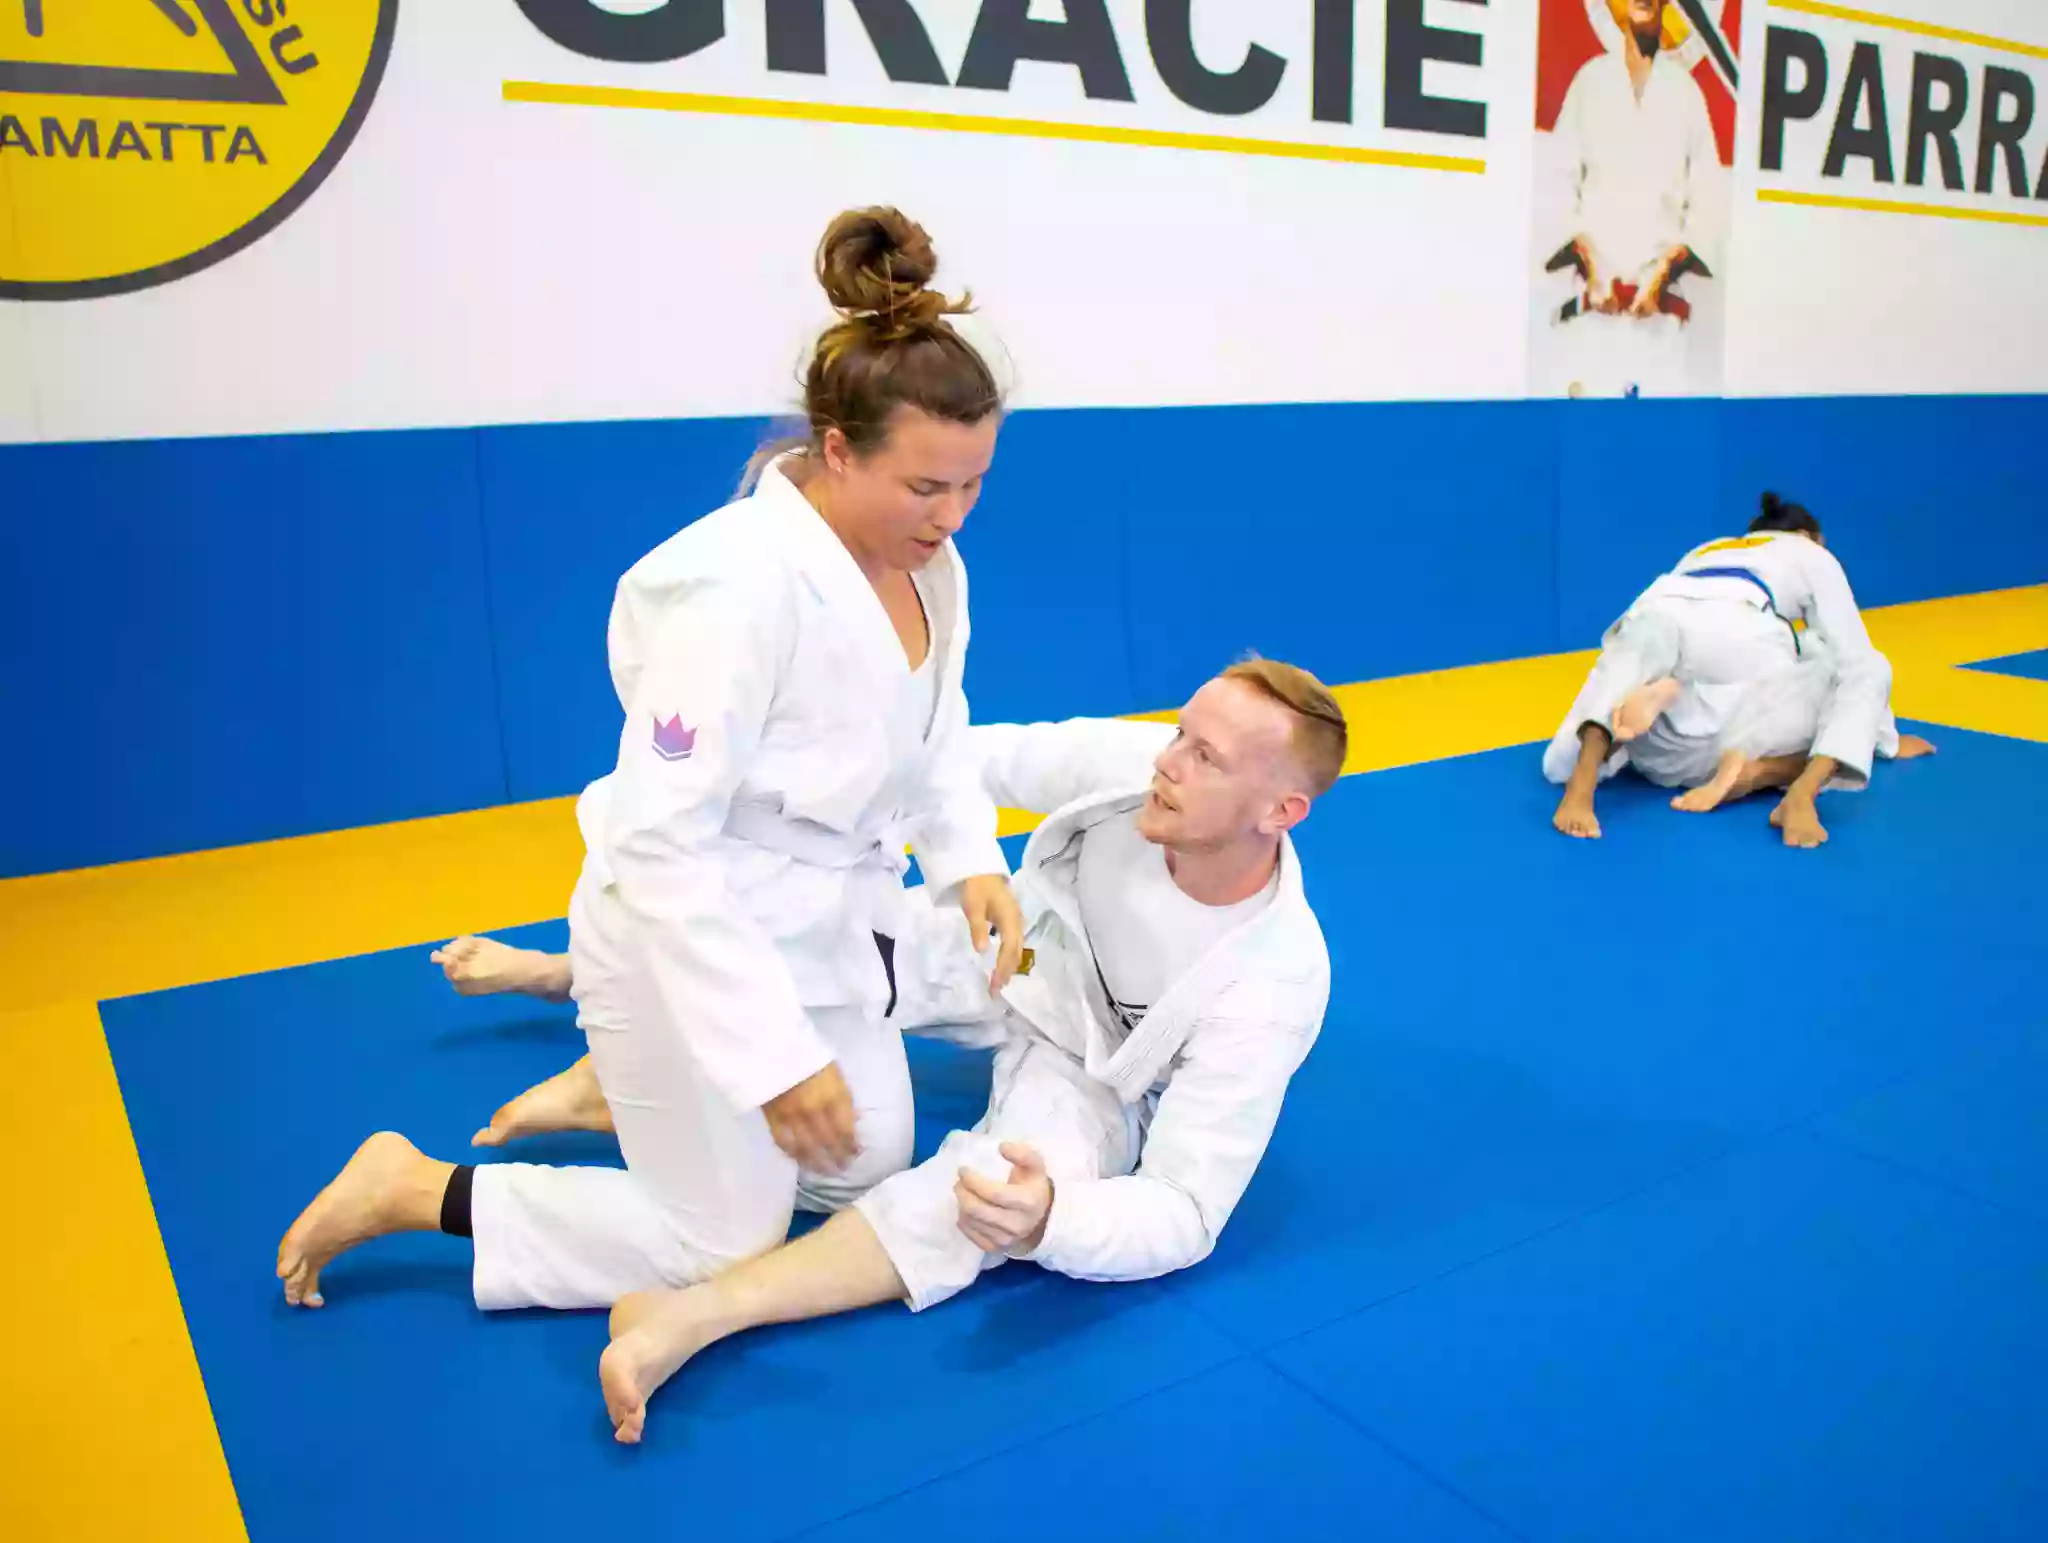 Gracie Parramatta Jiu Jitsu Academy